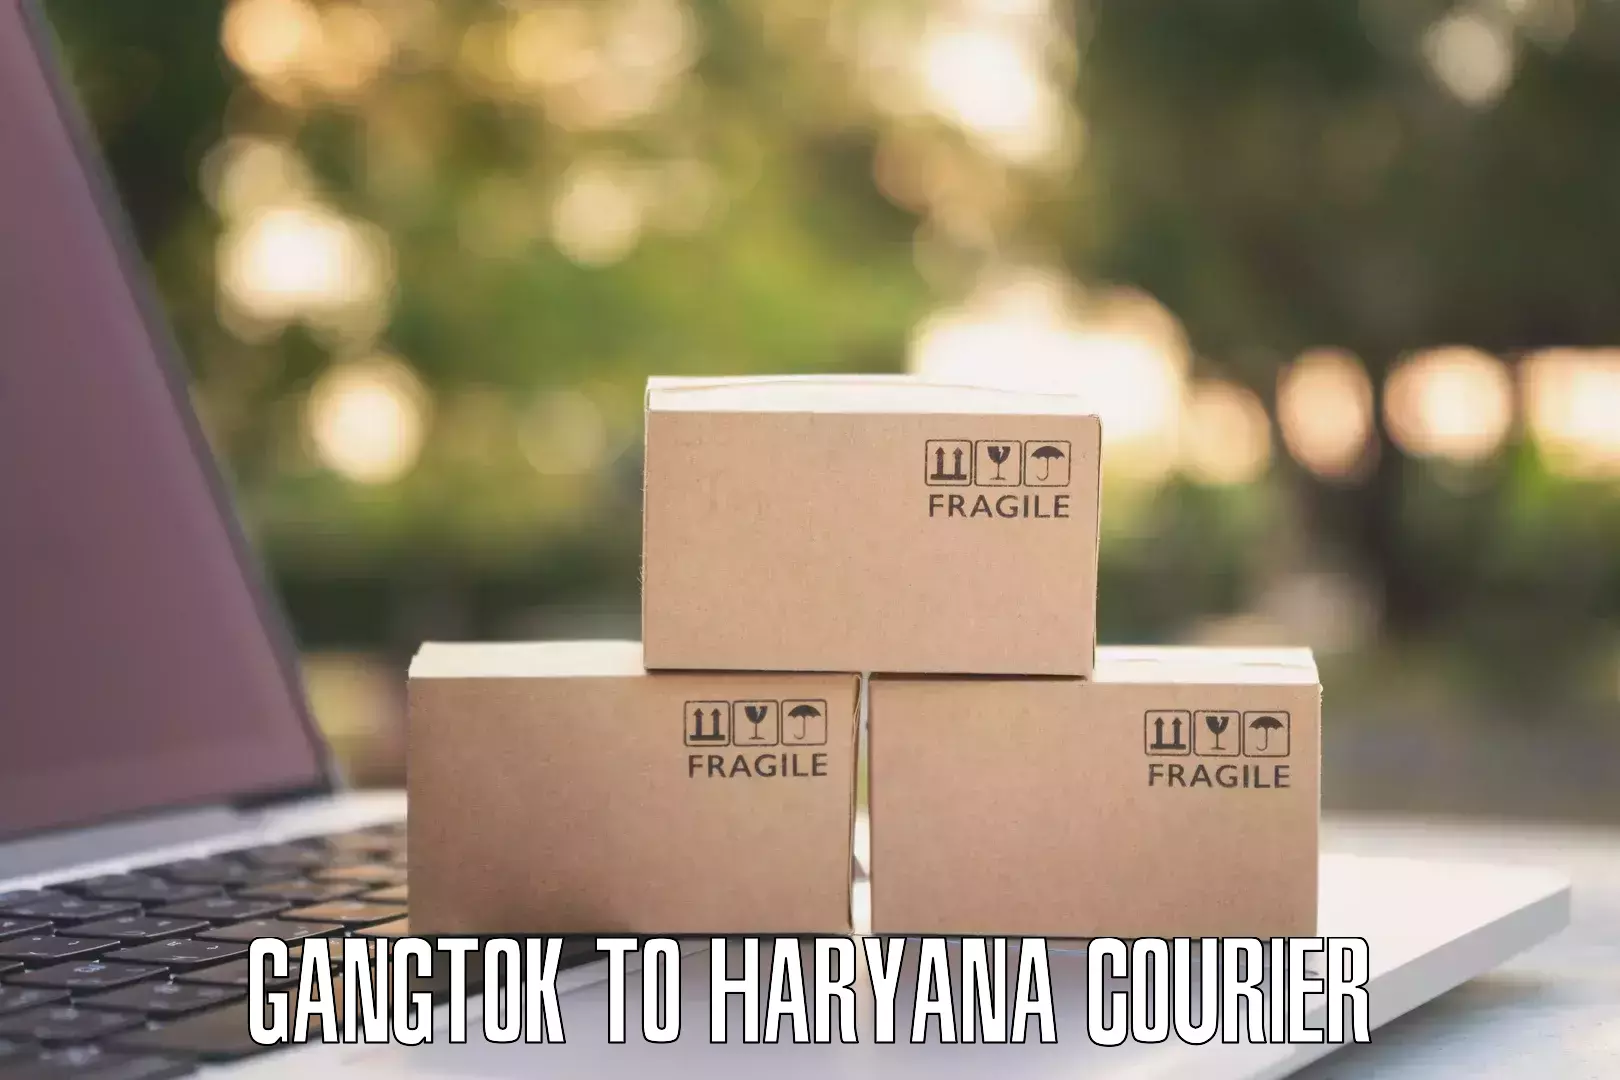 Efficient cargo handling Gangtok to Gurgaon